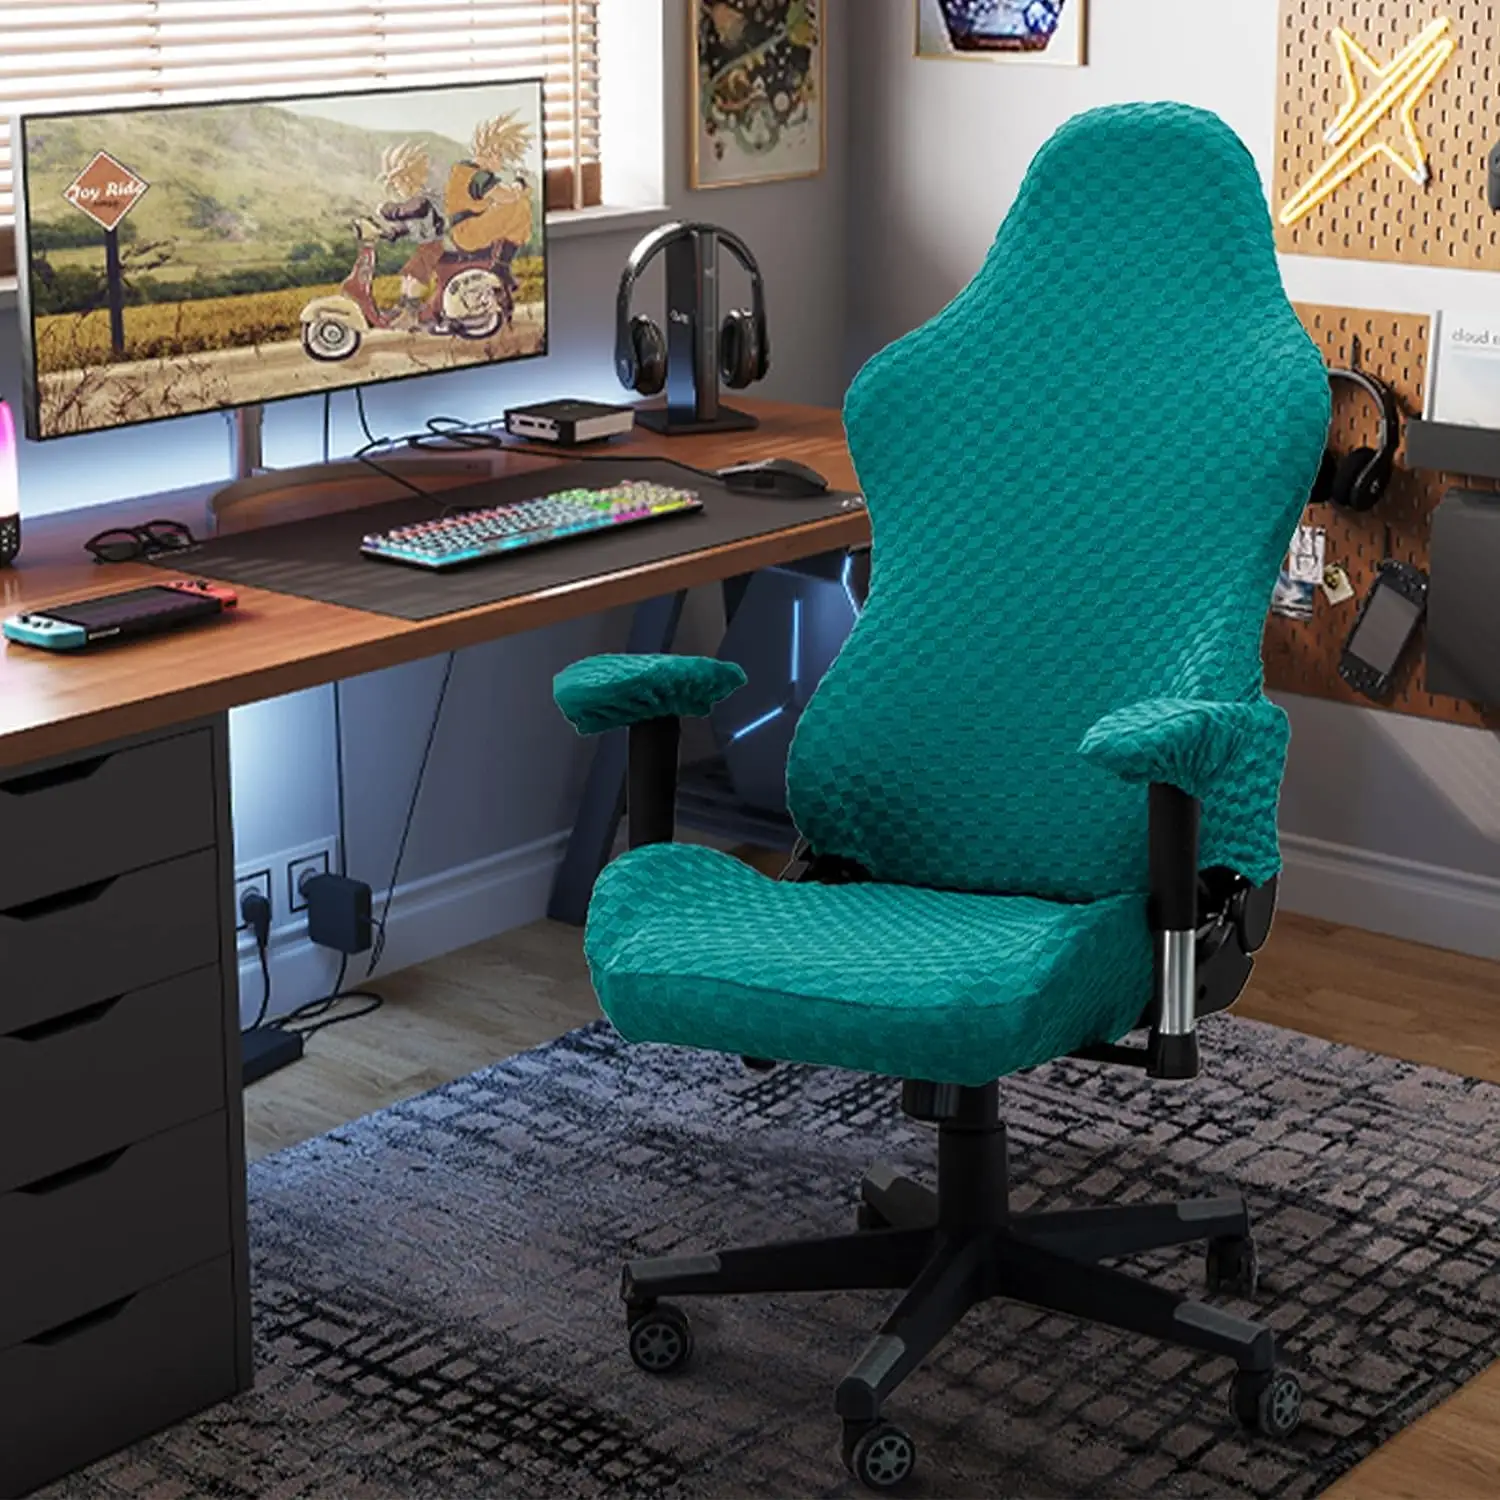 Sarung kursi Gaming, Non-slip dapat dicuci warna Solid mudah dipasang merenggang